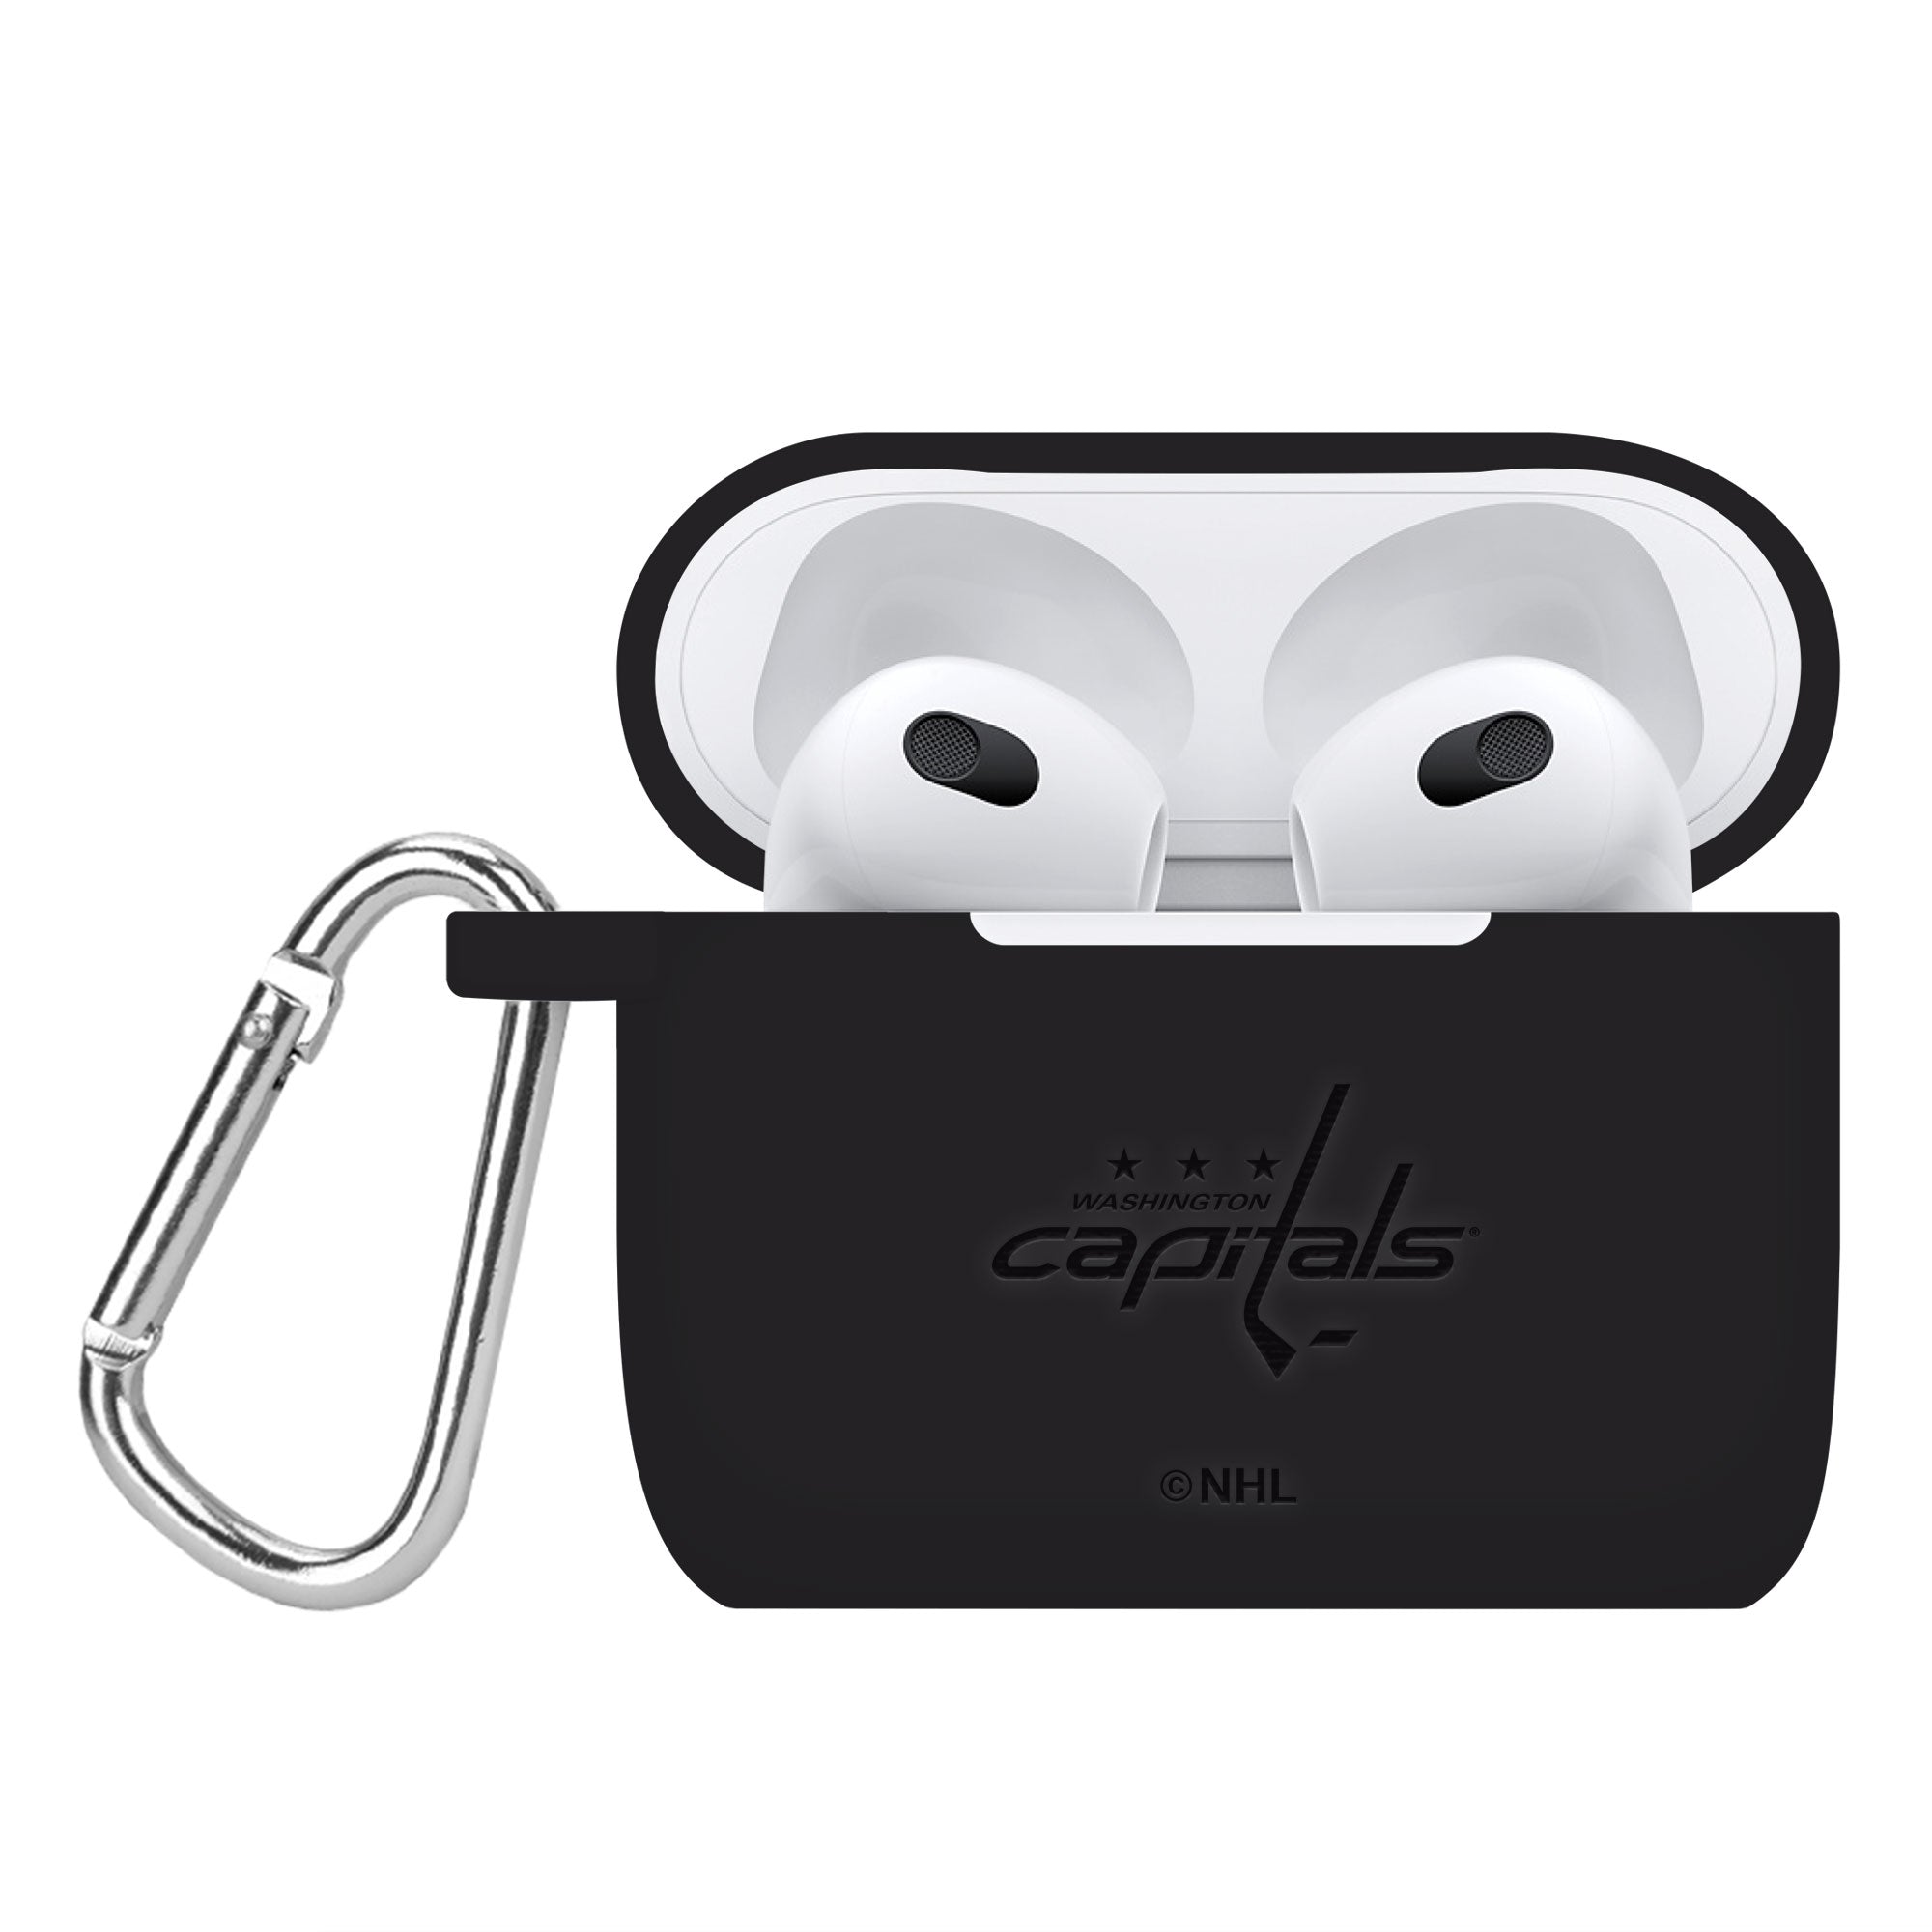 Washington Capitals Engraved Apple AirPod Gen 3 Case Cover